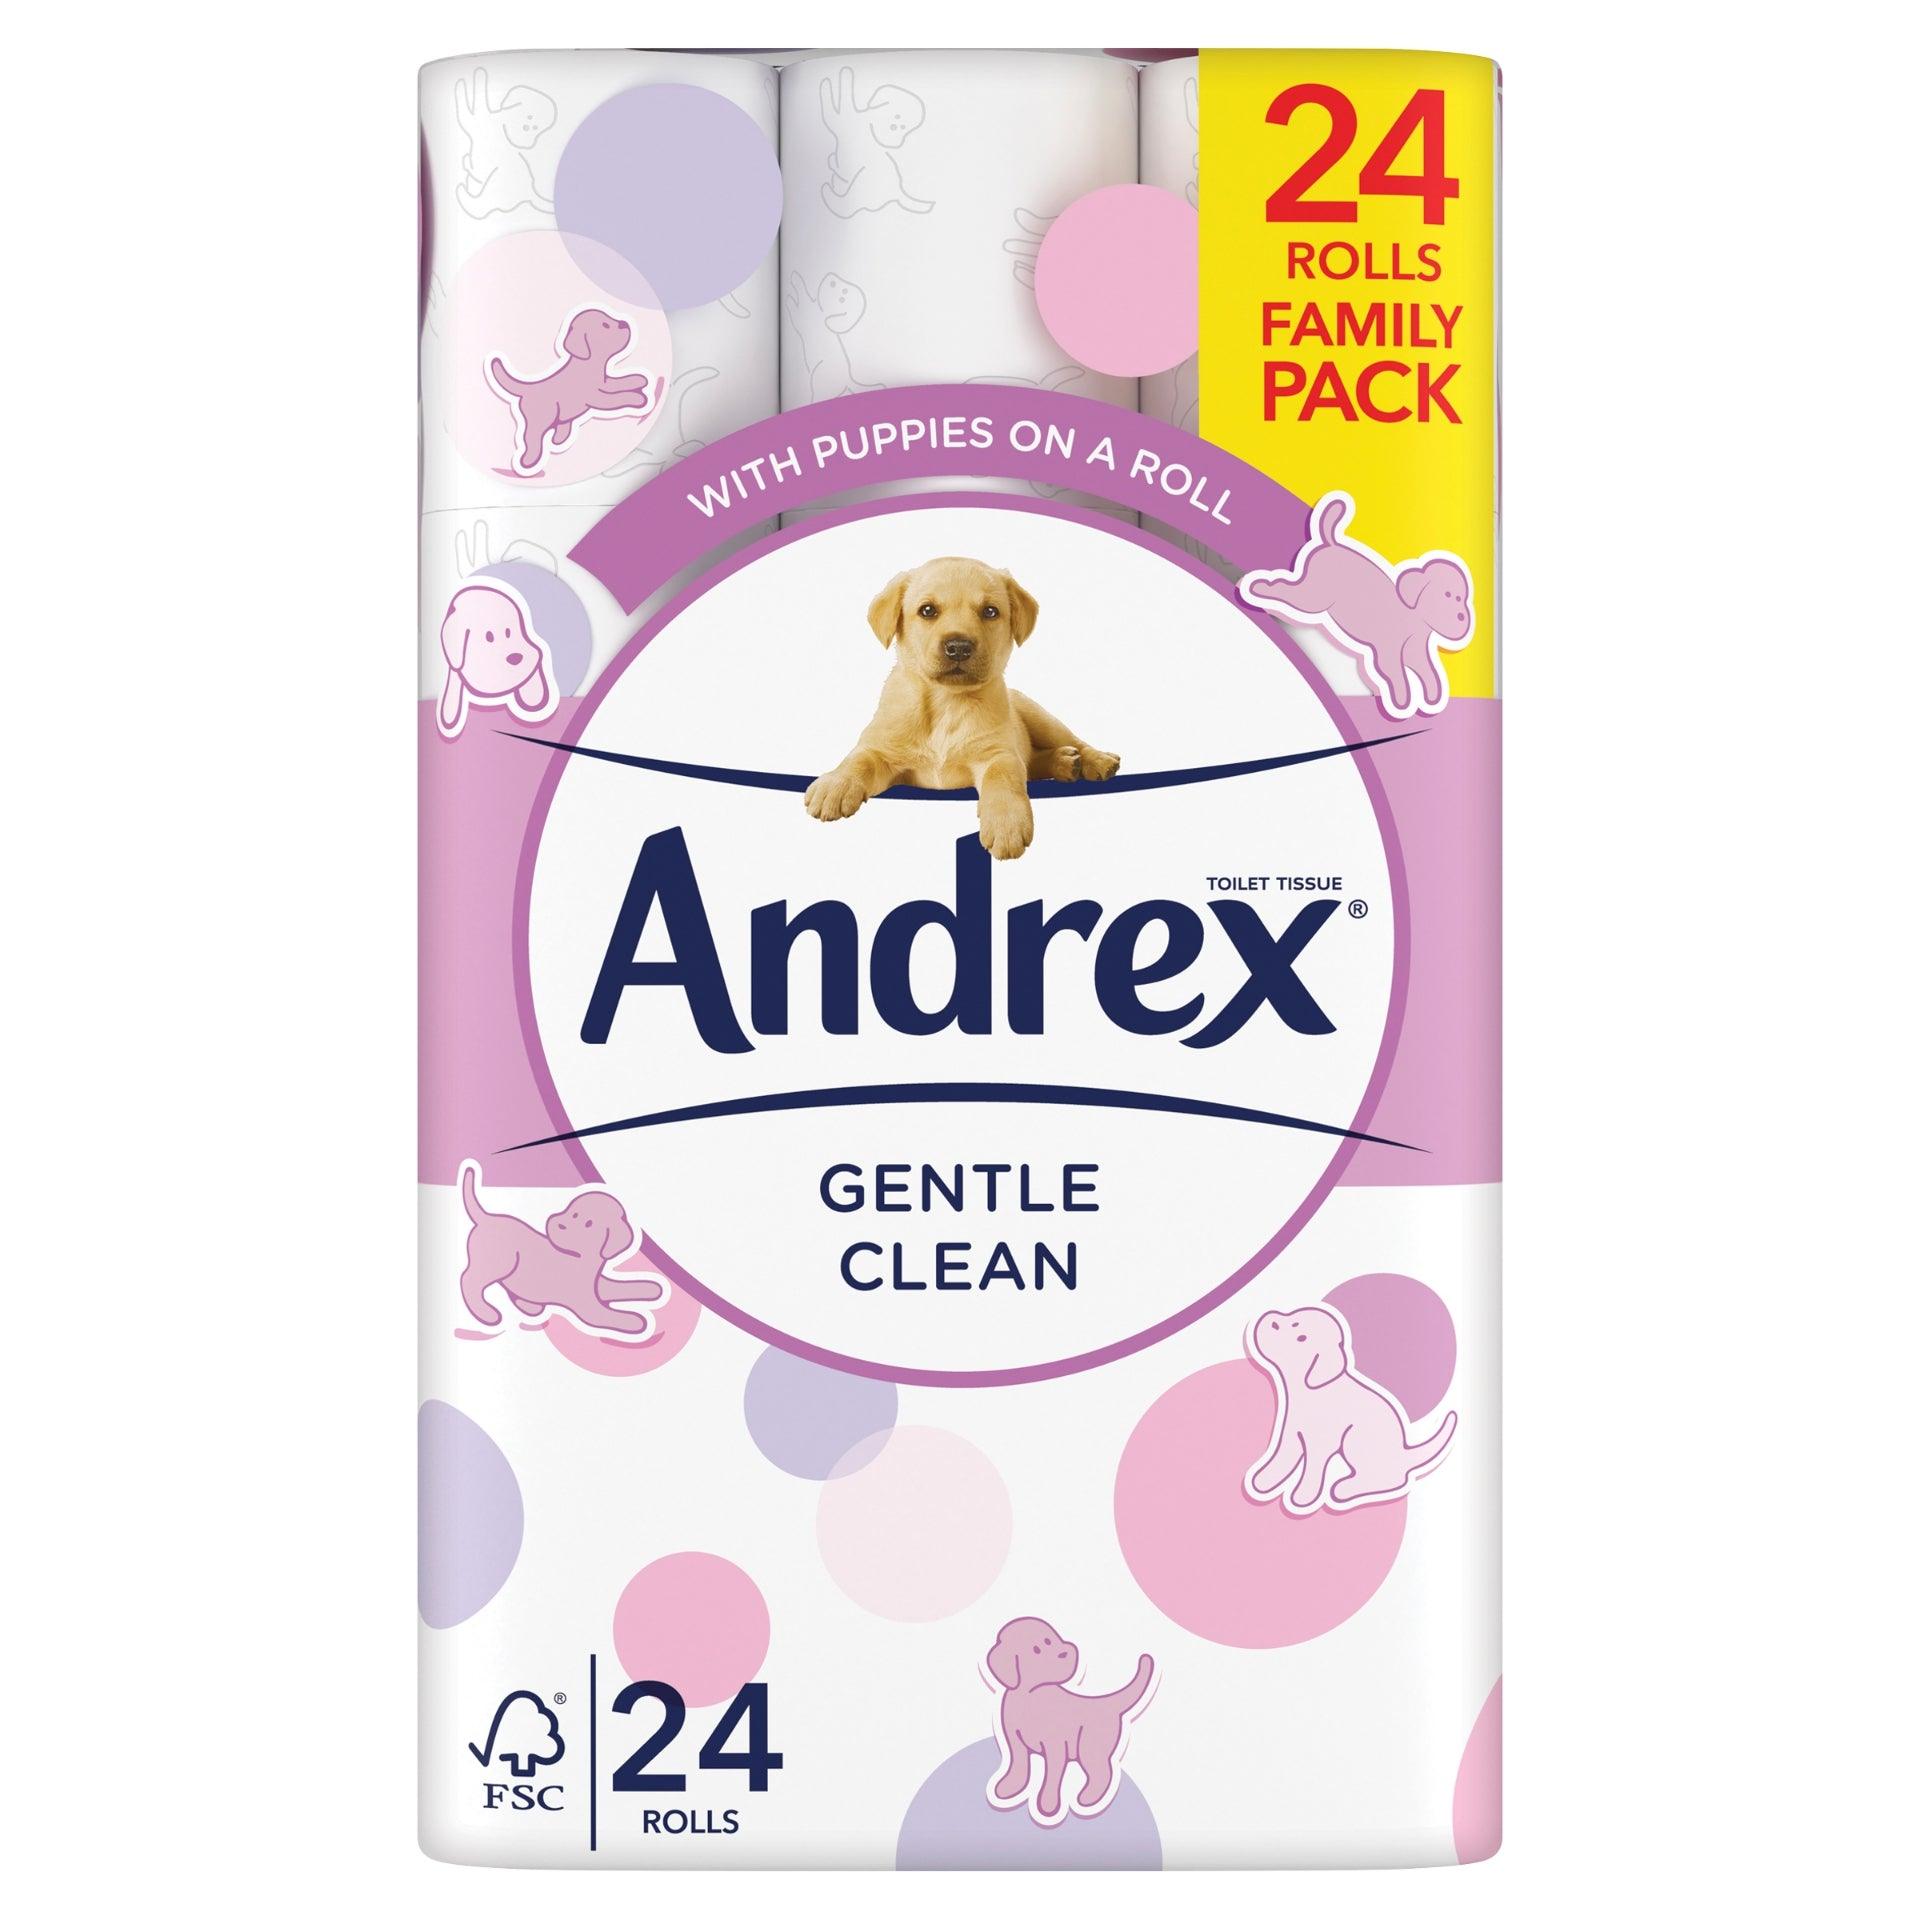 Andrex Toilet Roll - Gentle Clean - 24 Pack - Vending Superstore